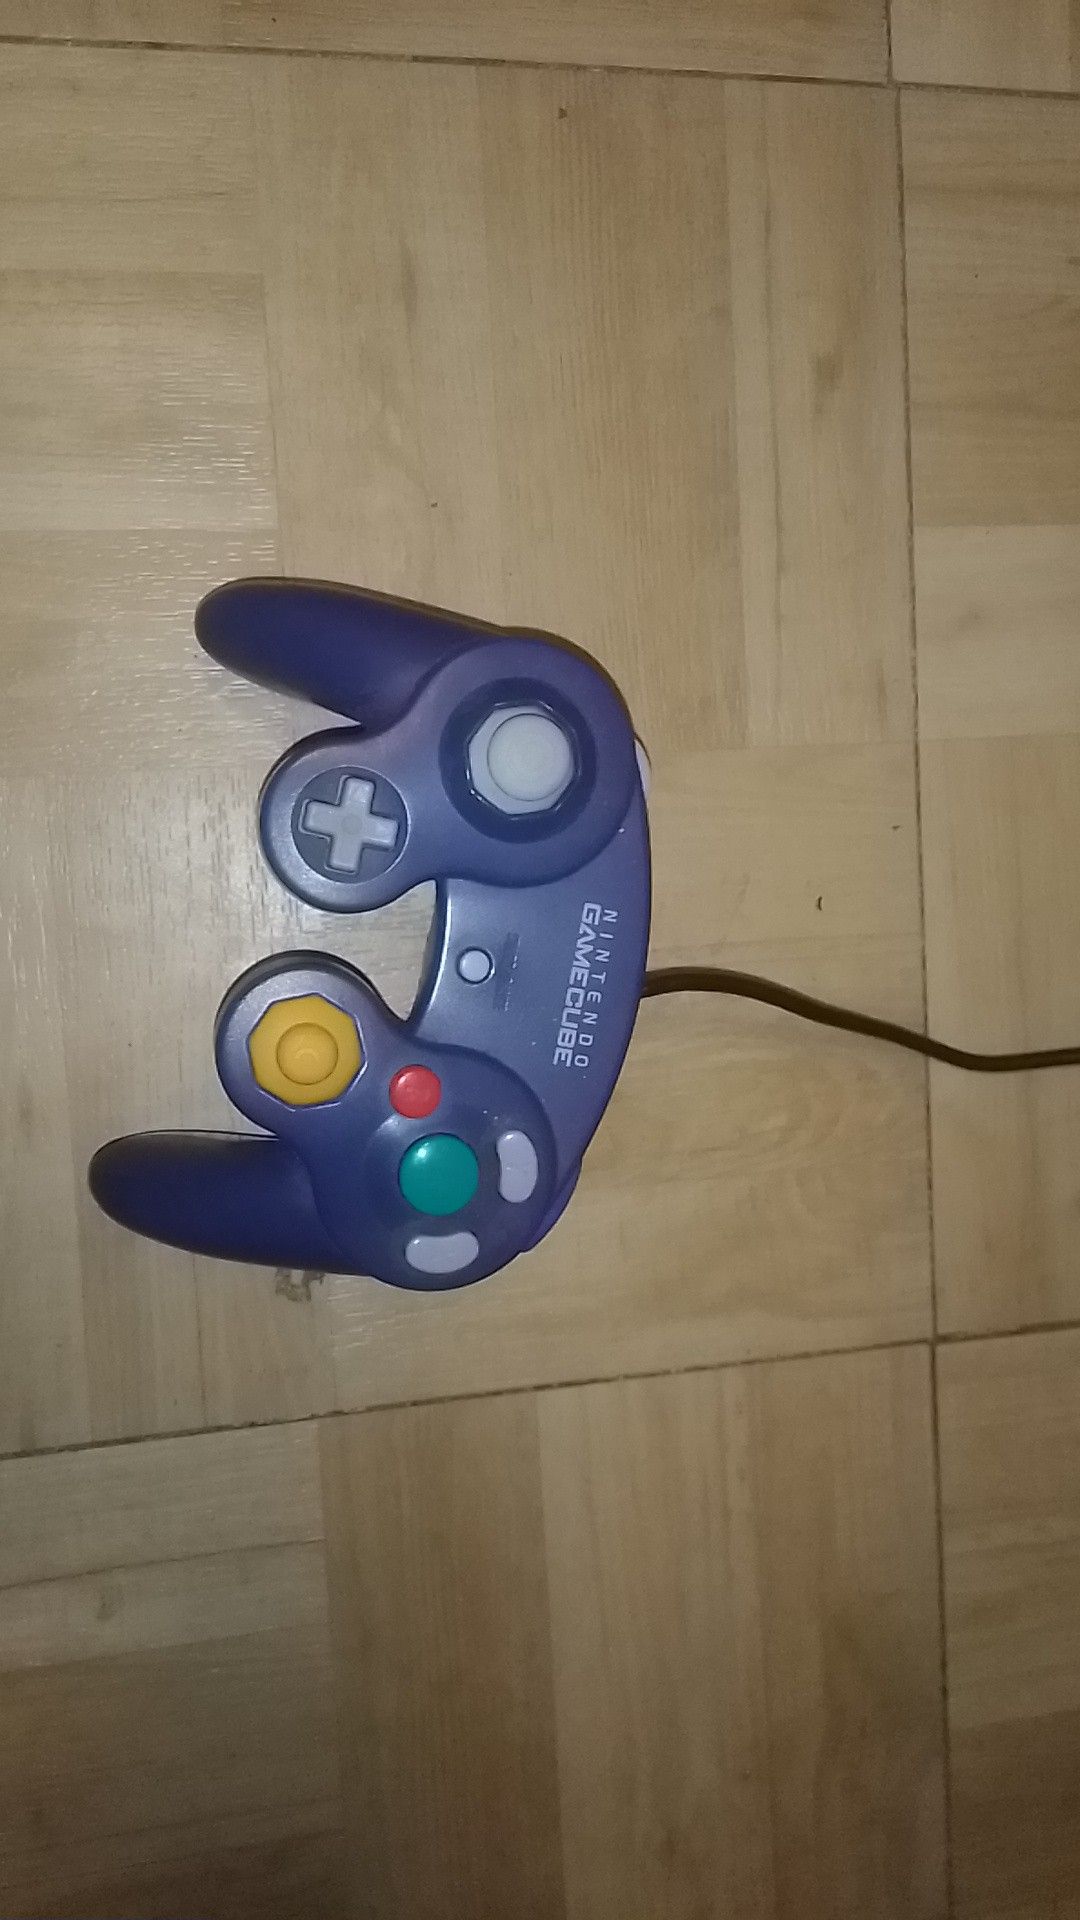 Official GameCube controller